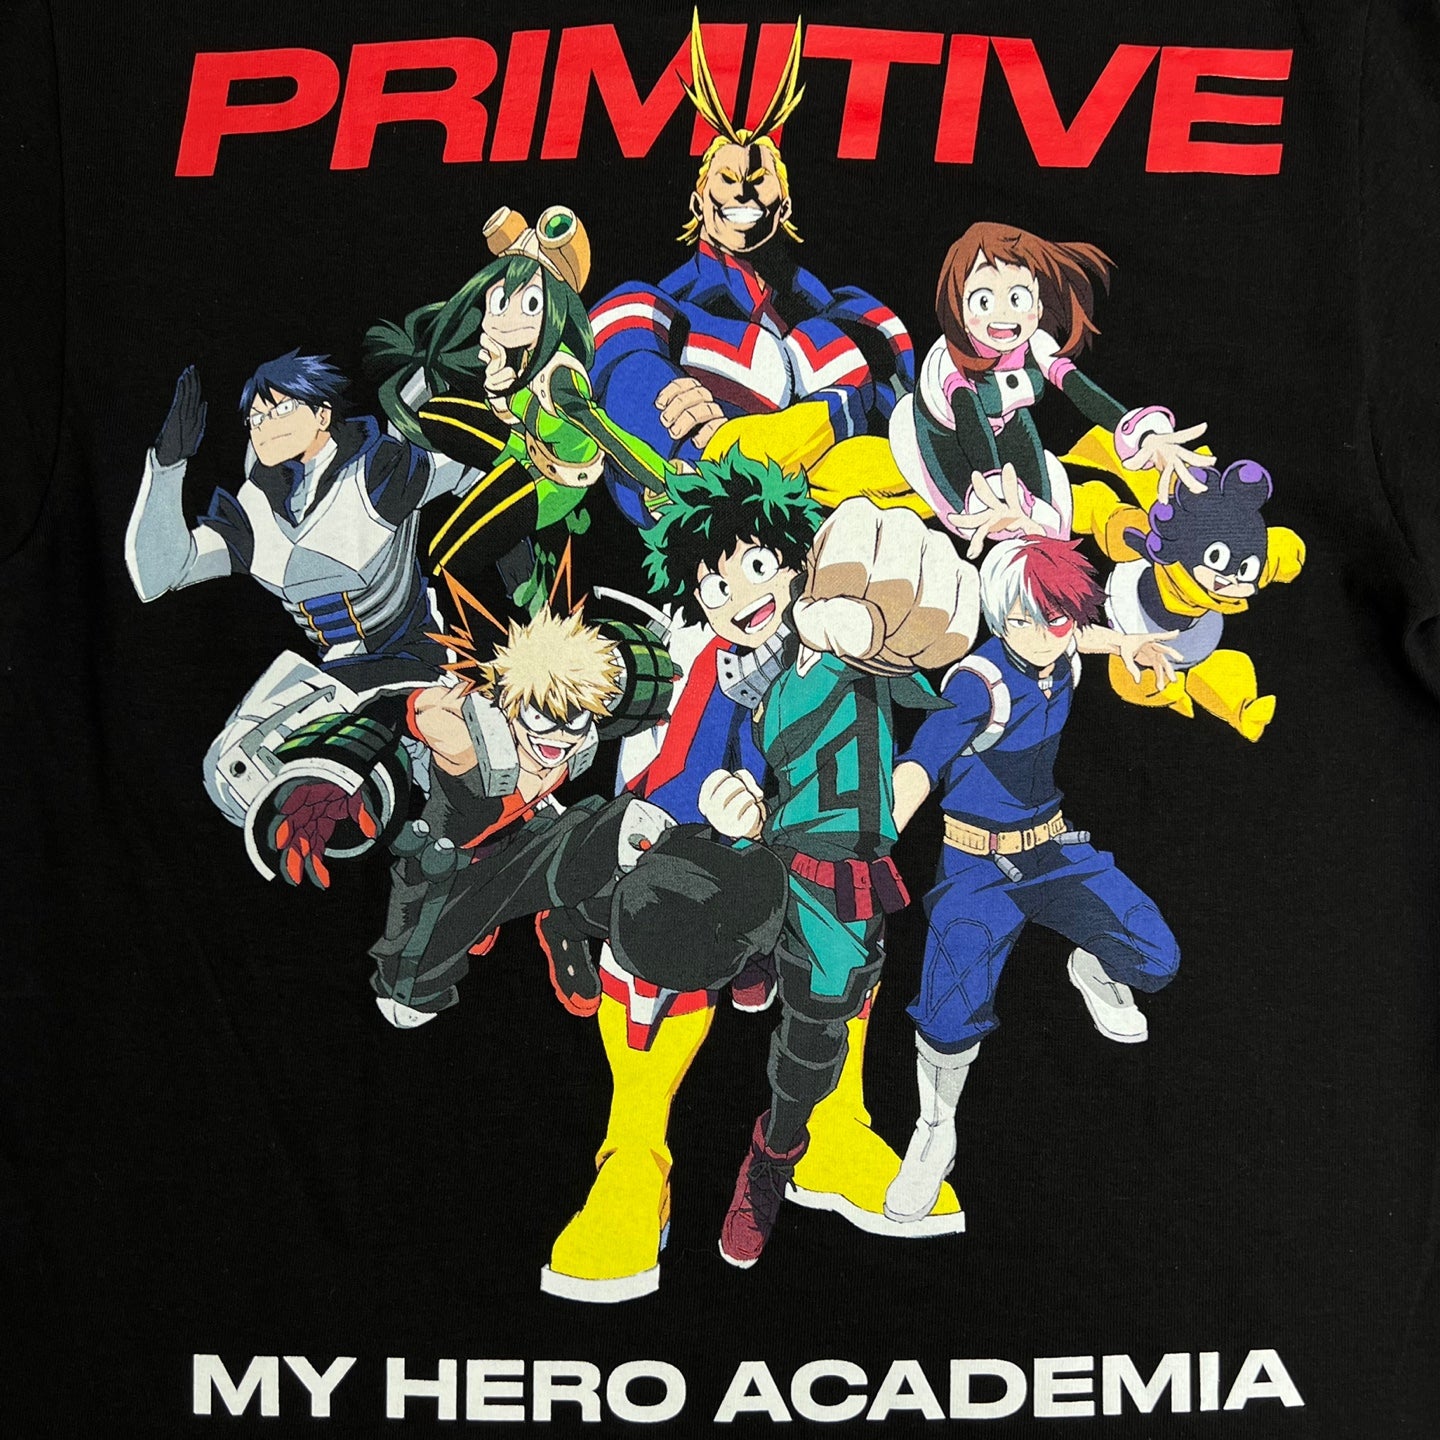 PRIMITIVE X My Hero Academia Short Sleeve T-Shirt - BLACK